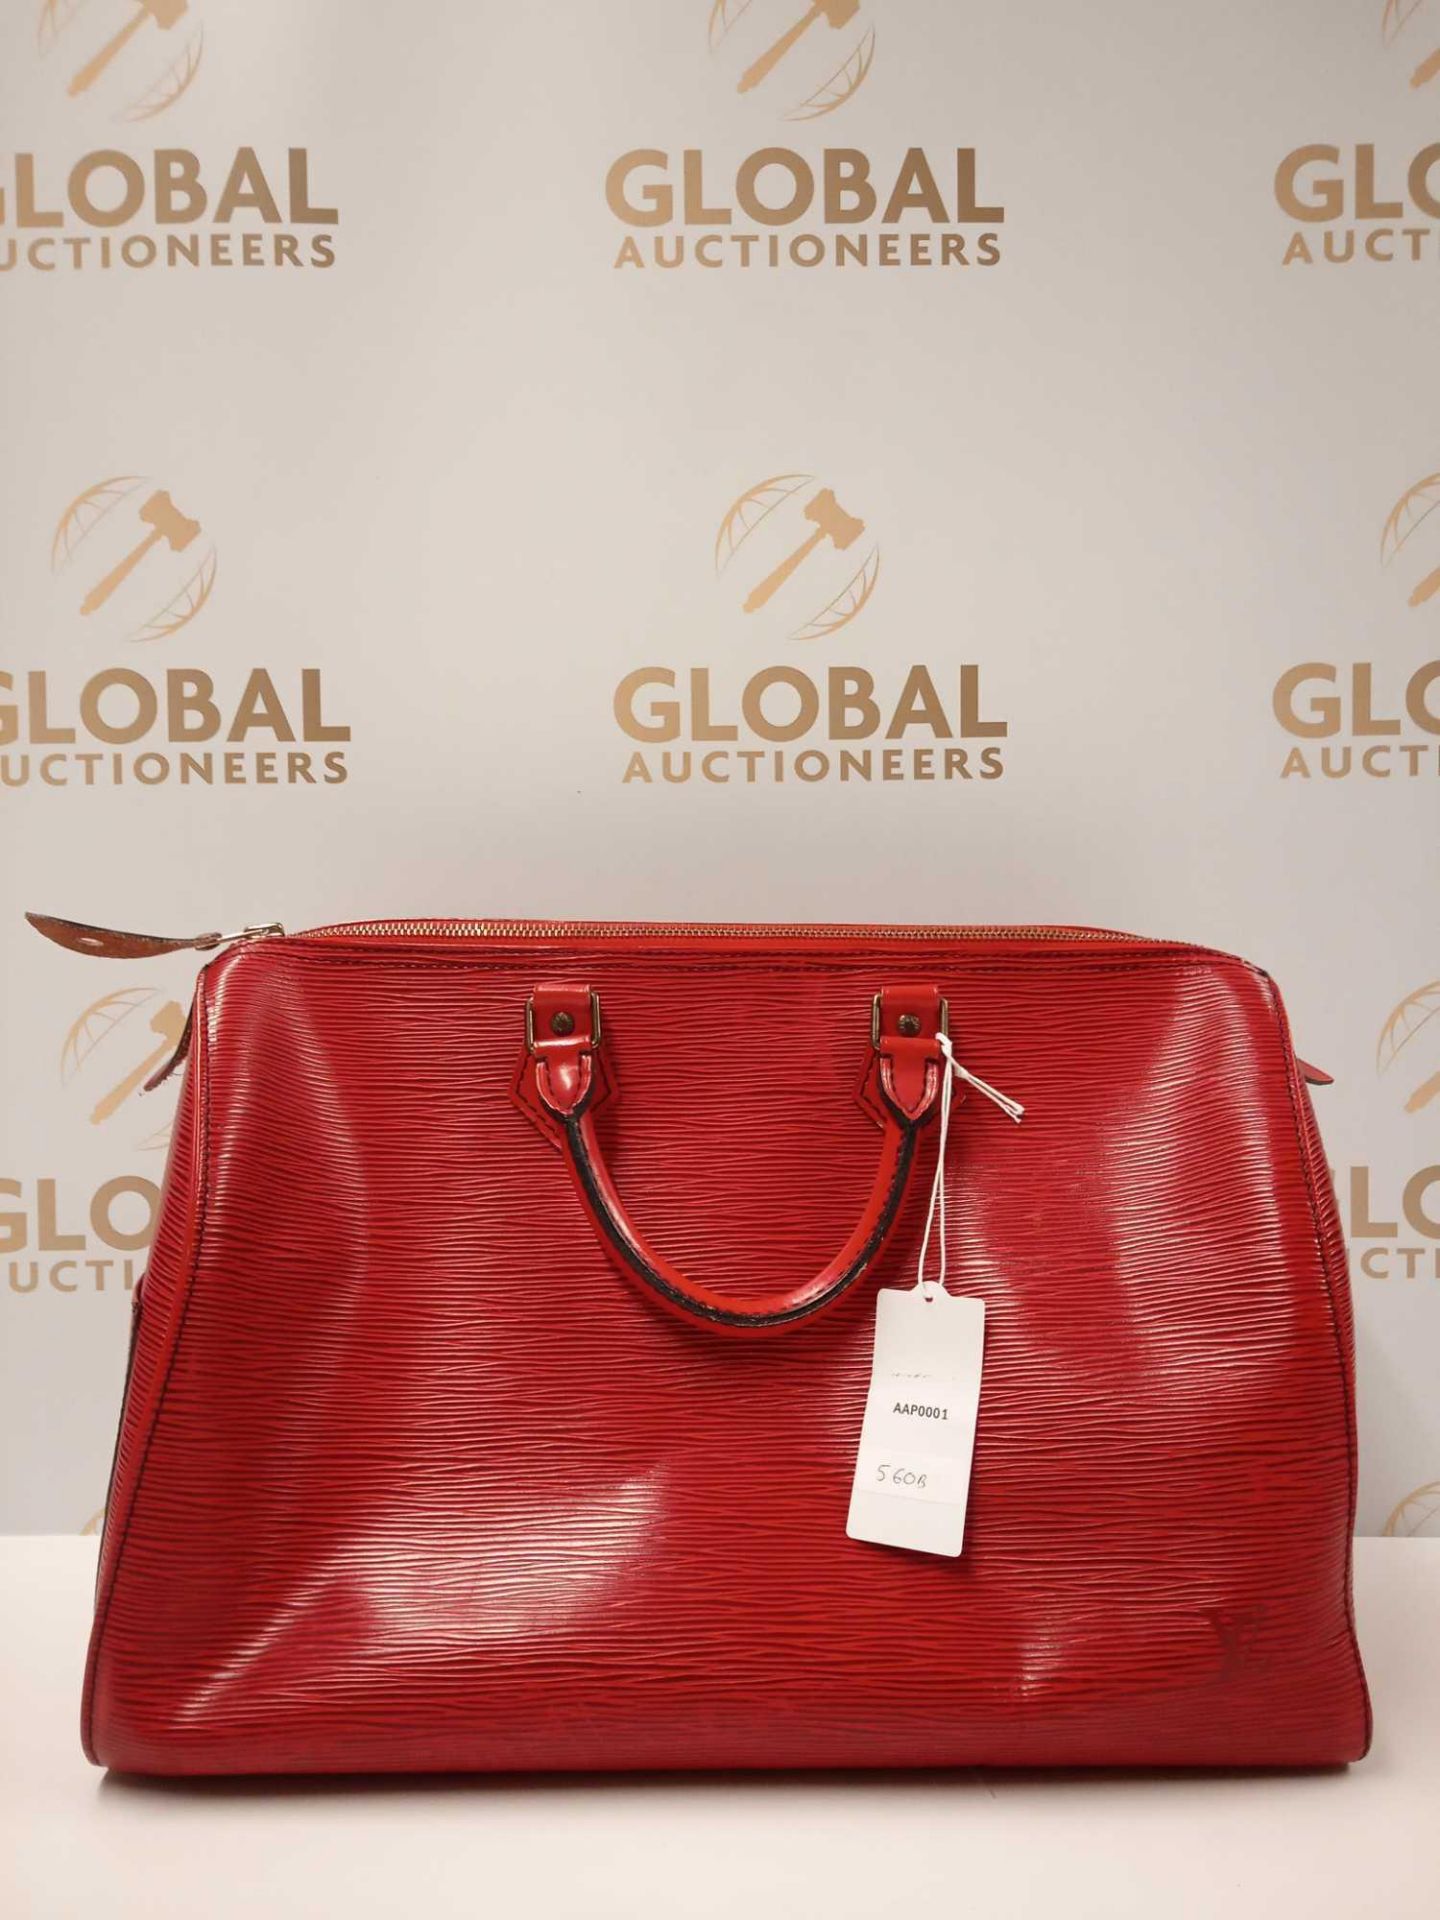 RRP £1300 Louis Vuitton Speedy Black Stitching Red Calf Leather Epi Handbag Aap0001, Grade Ab (